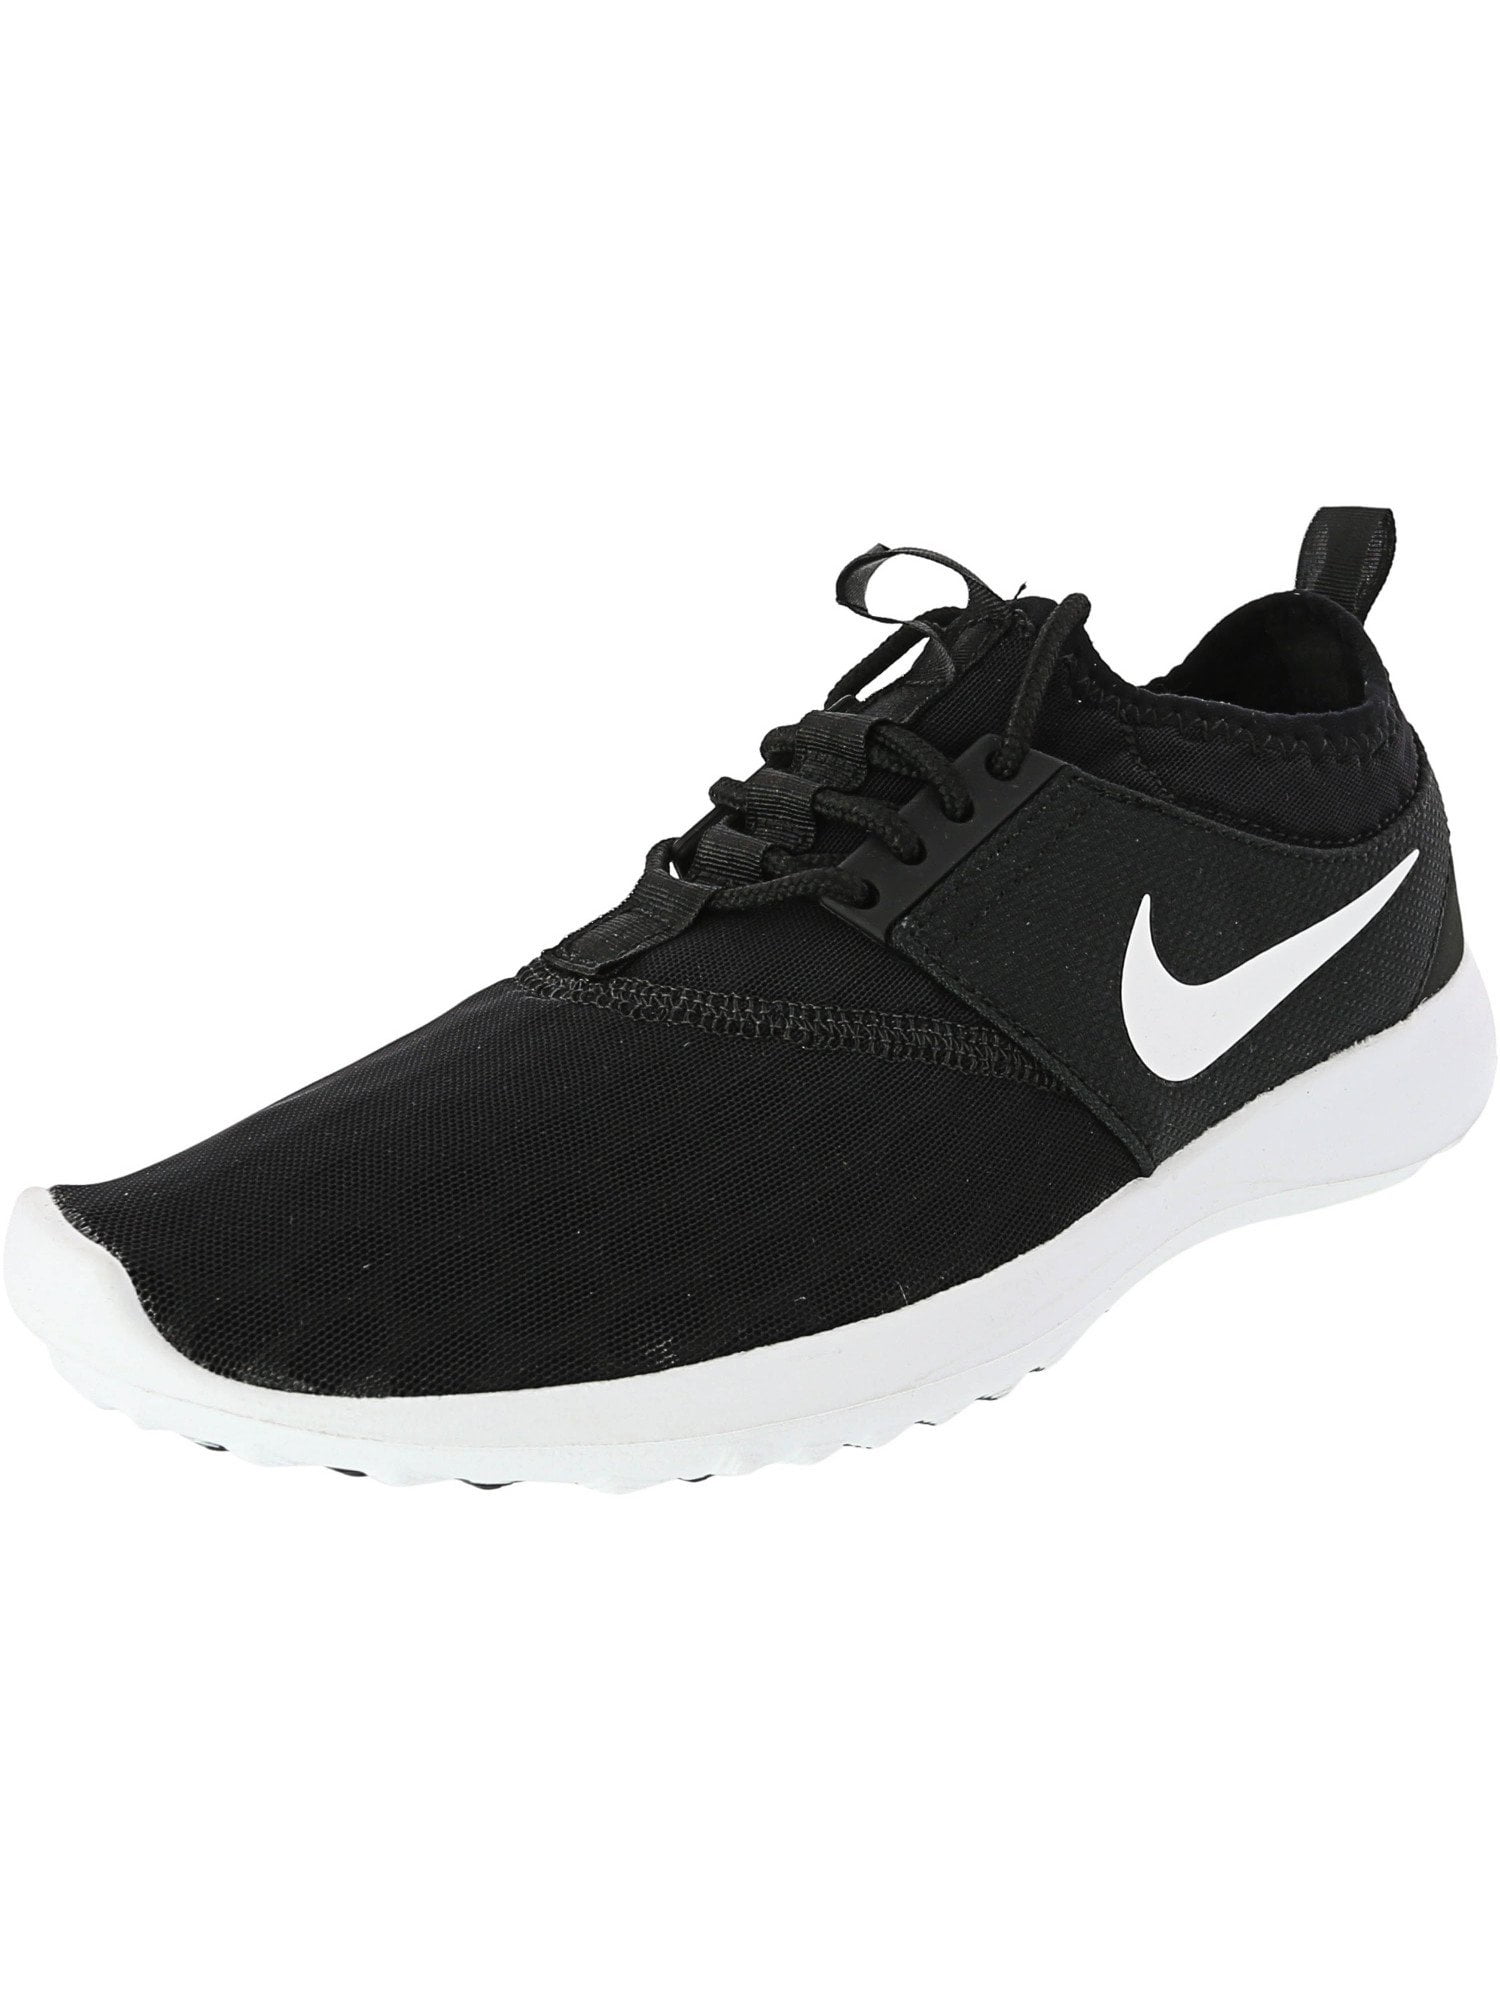 Nike Juvenate Running Shoe 6.5M - Black / White / Black / White - Walmart.com